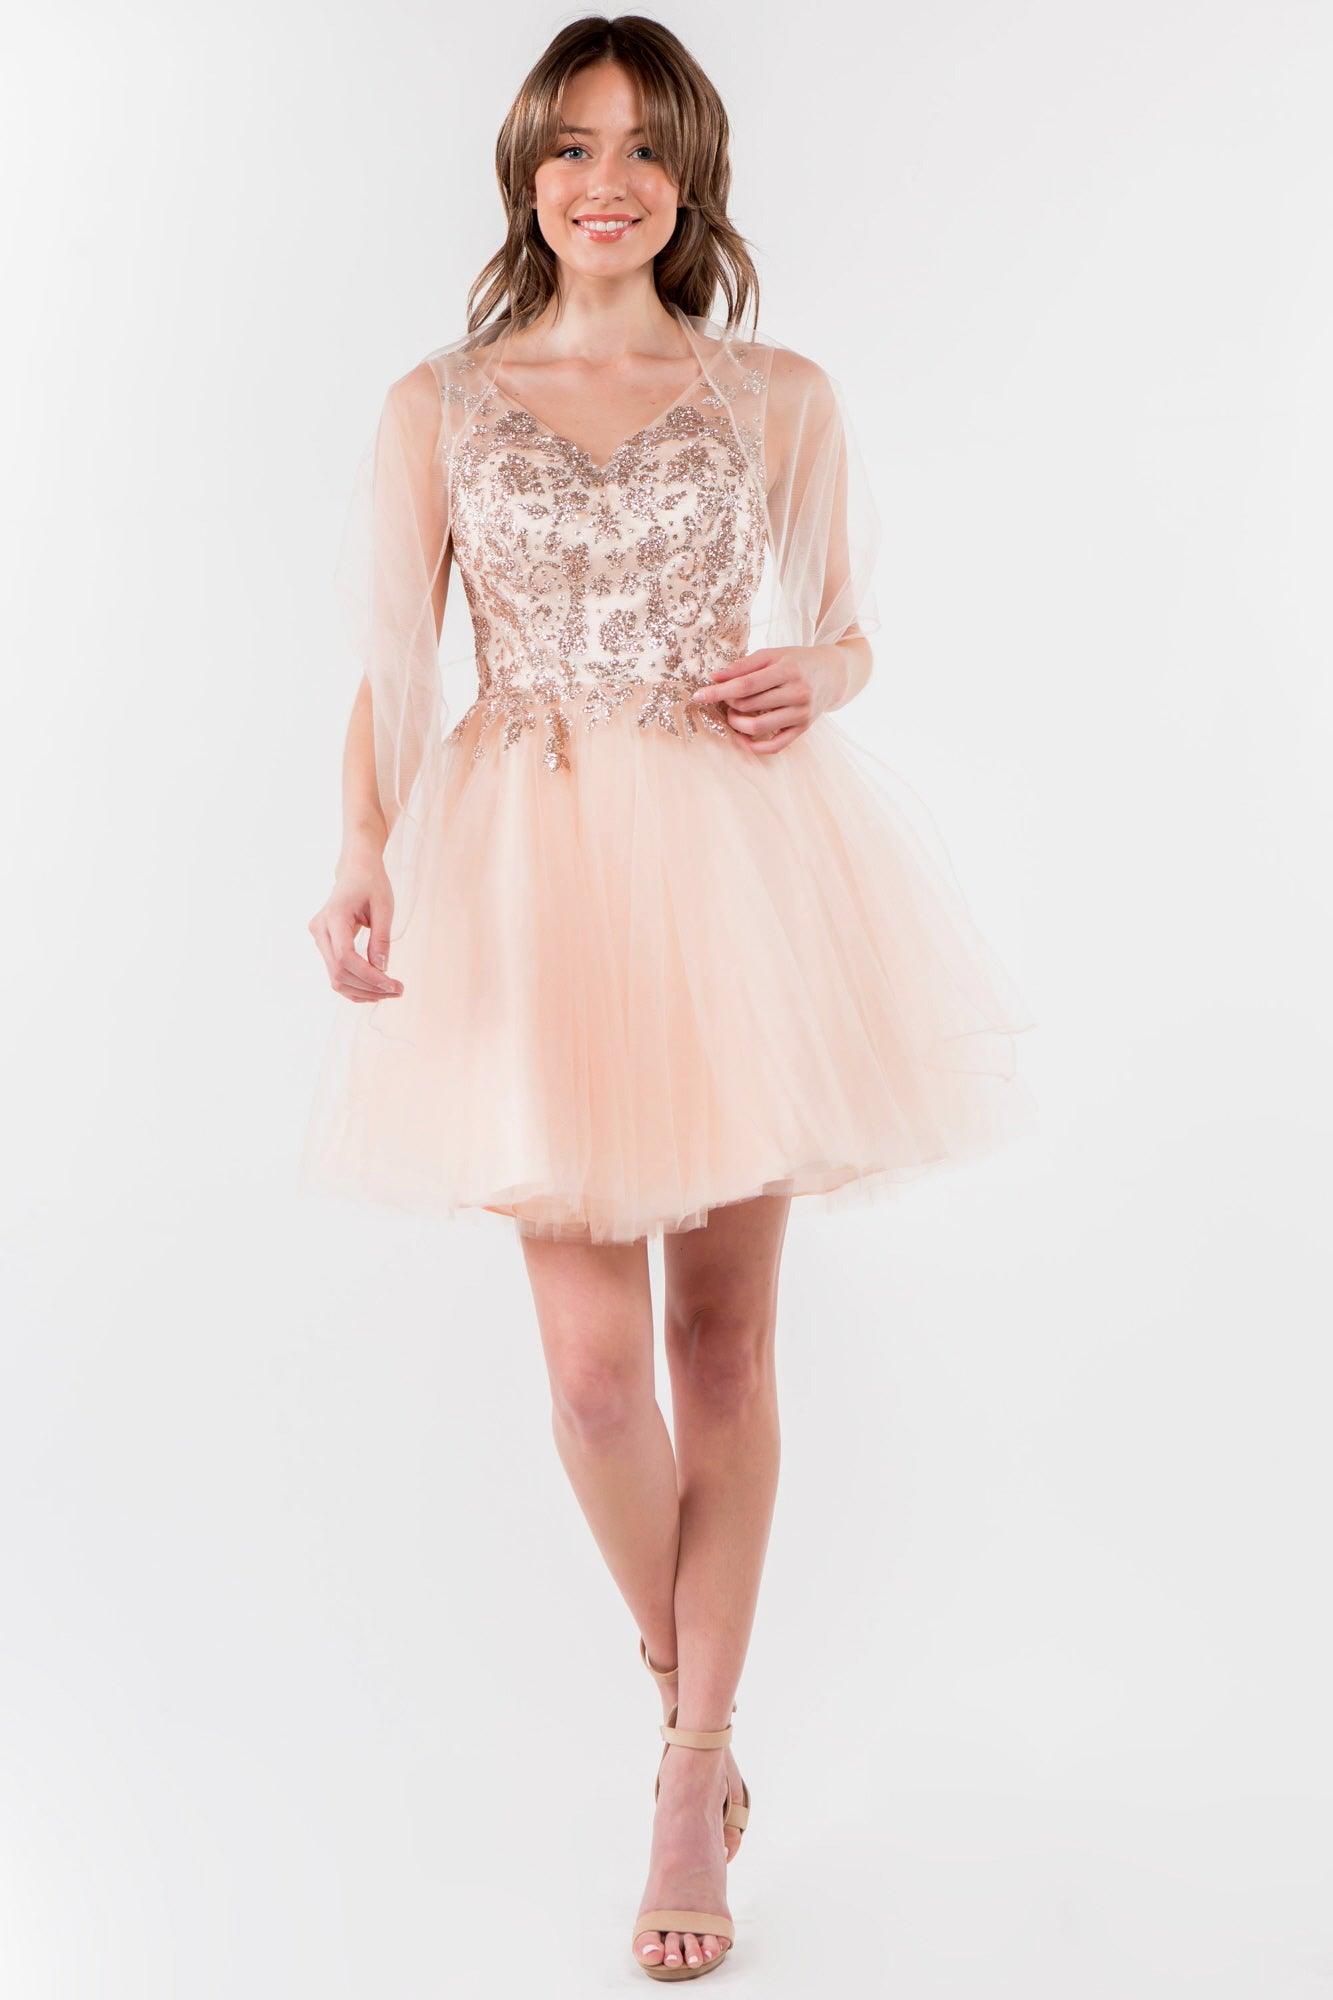 Glitter A Line Short Homecoming Dress - The Dress Outlet